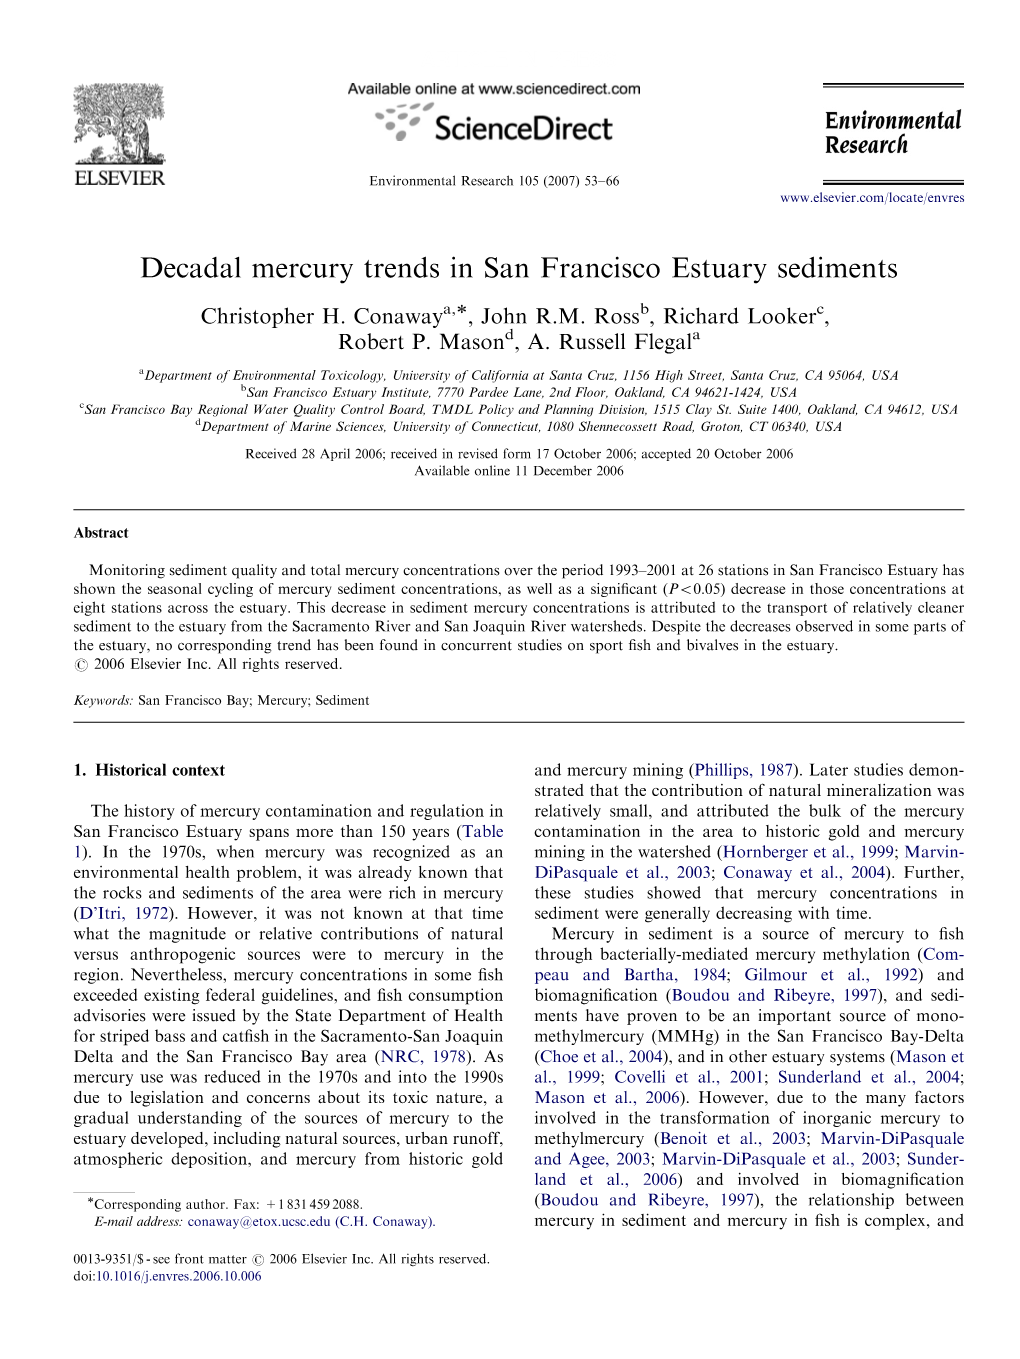 Decadal Mercury Trends in San Francisco Estuary Sediments